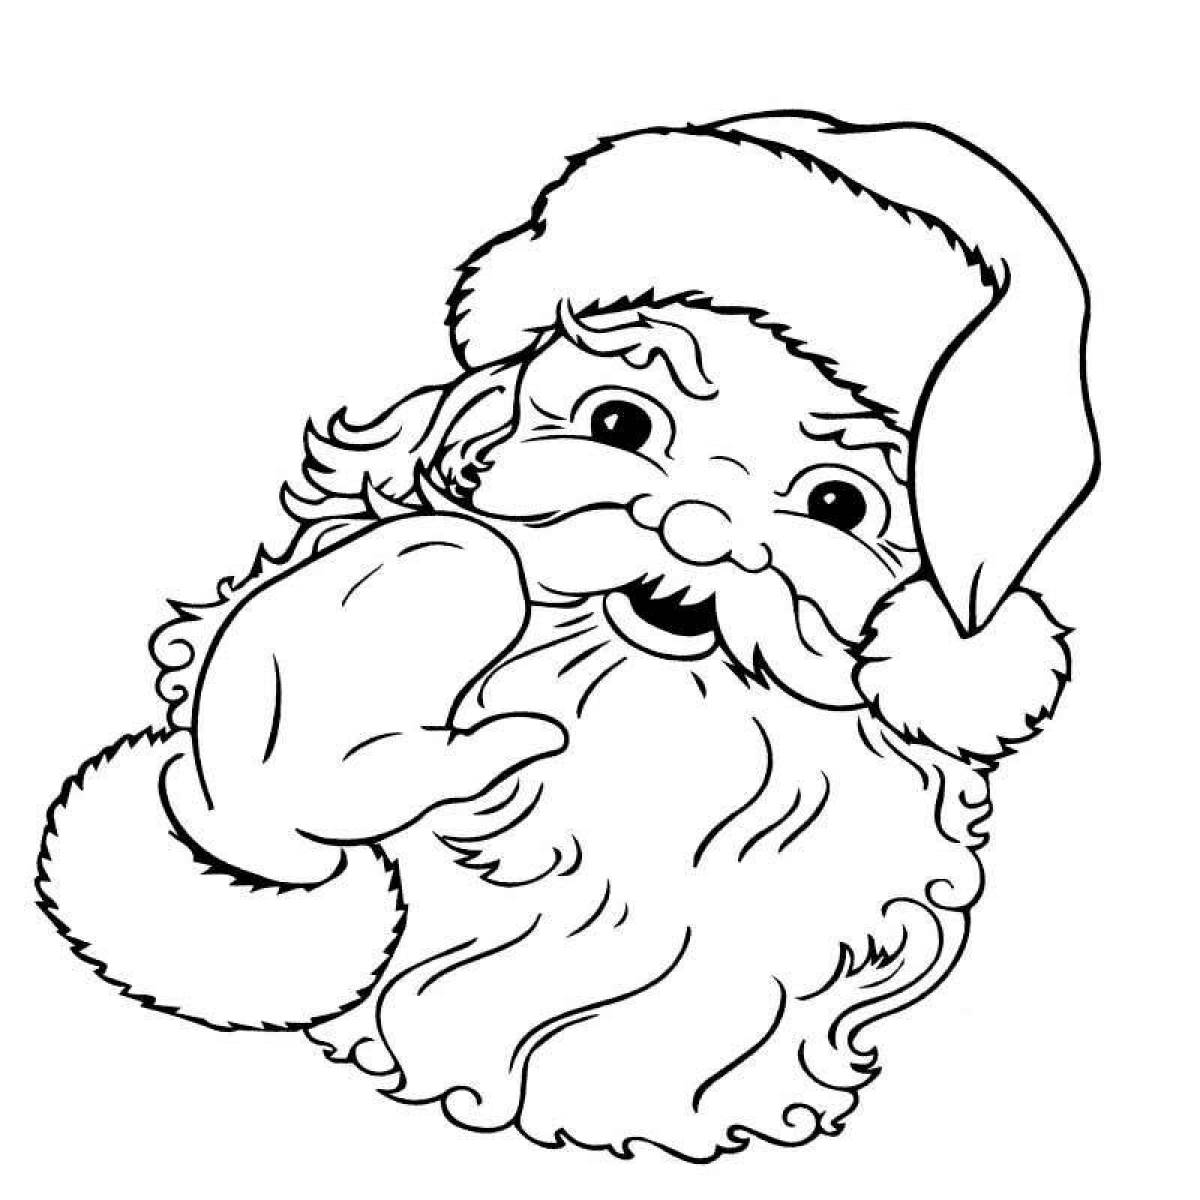 Animated santa face coloring page